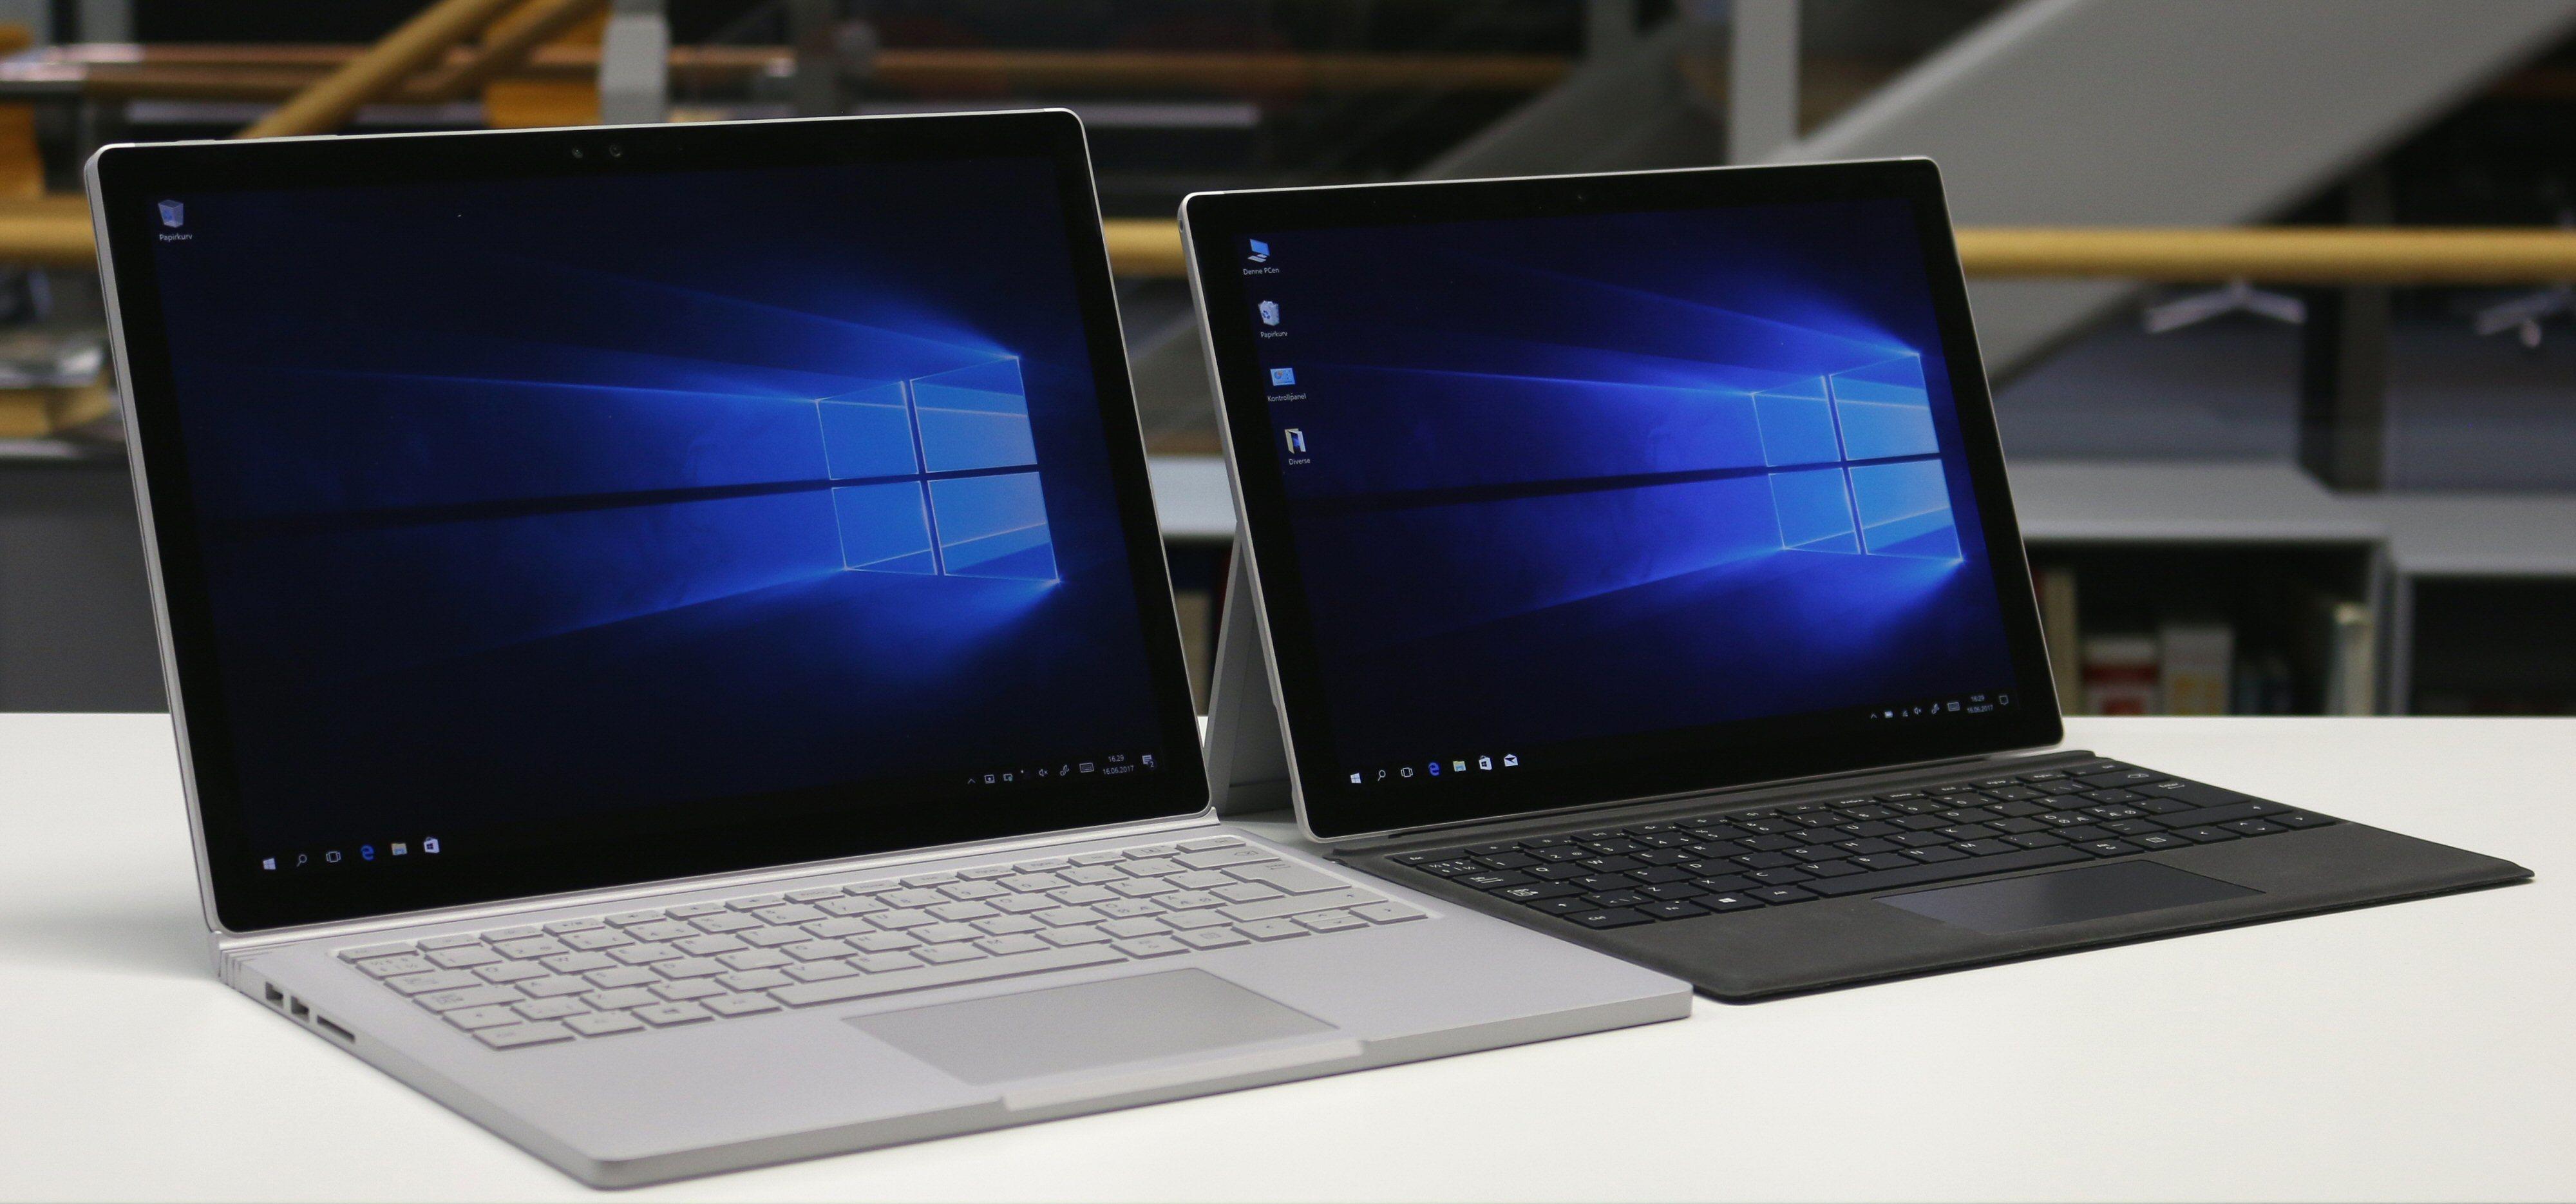 Surface Pro (til høyre) sammen med Surface Book, som er større og kraftigere.